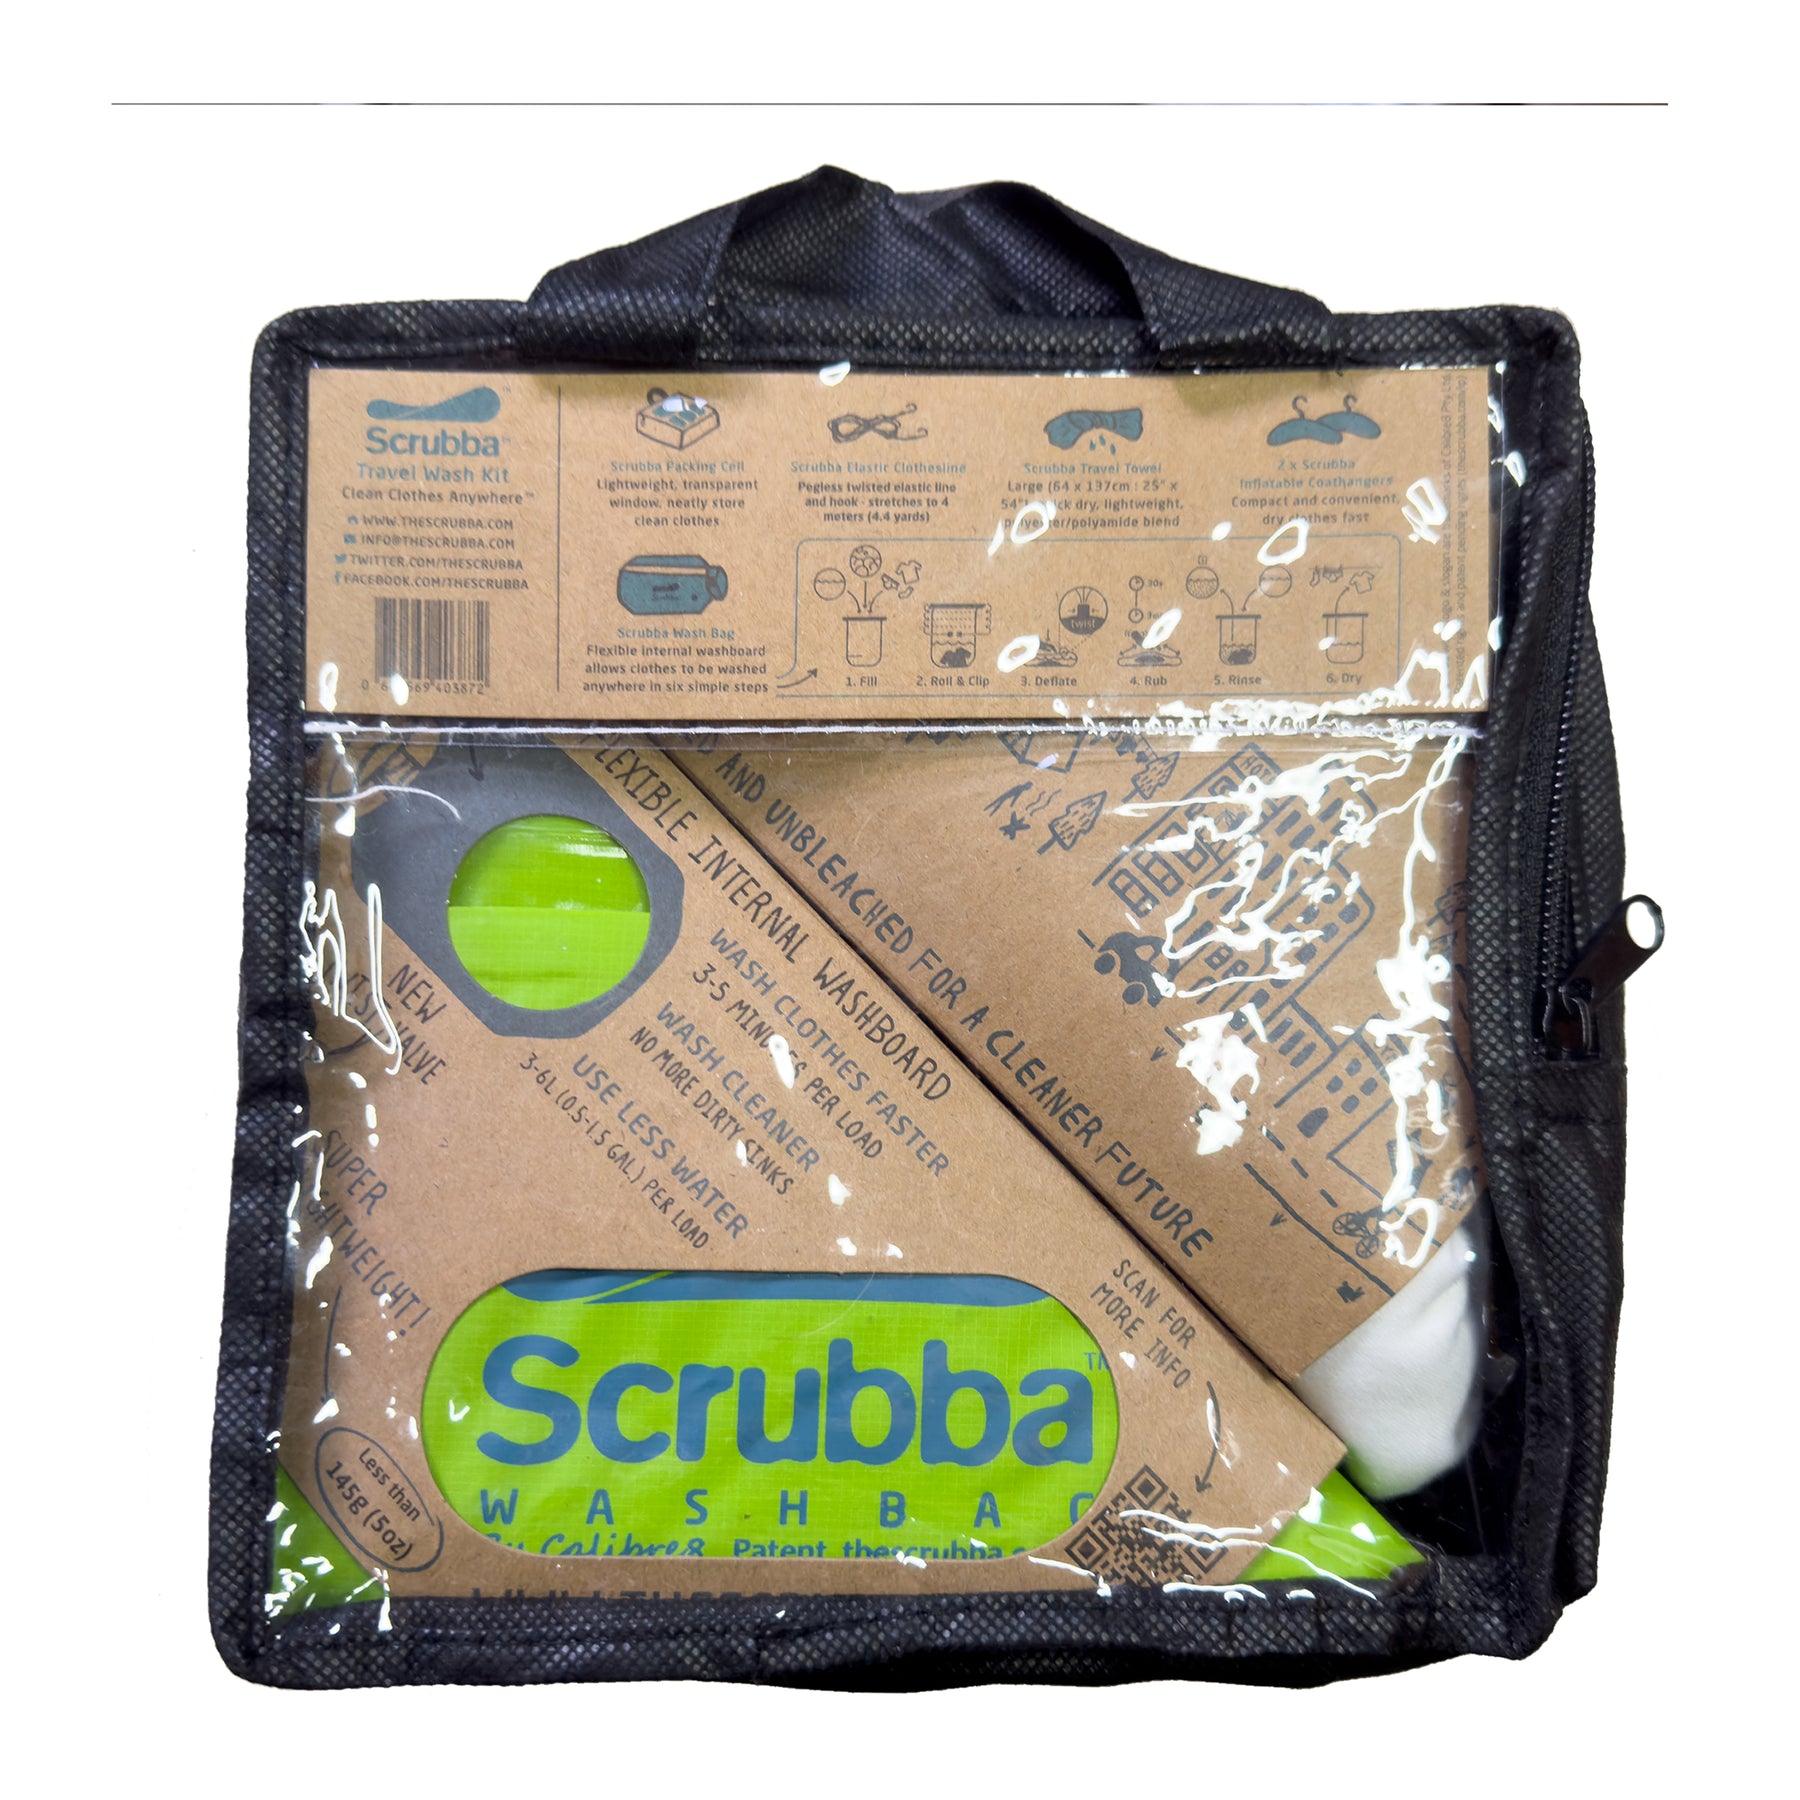 Scrubba Wash Bag Review: Better Than a Mini Washing Machine?